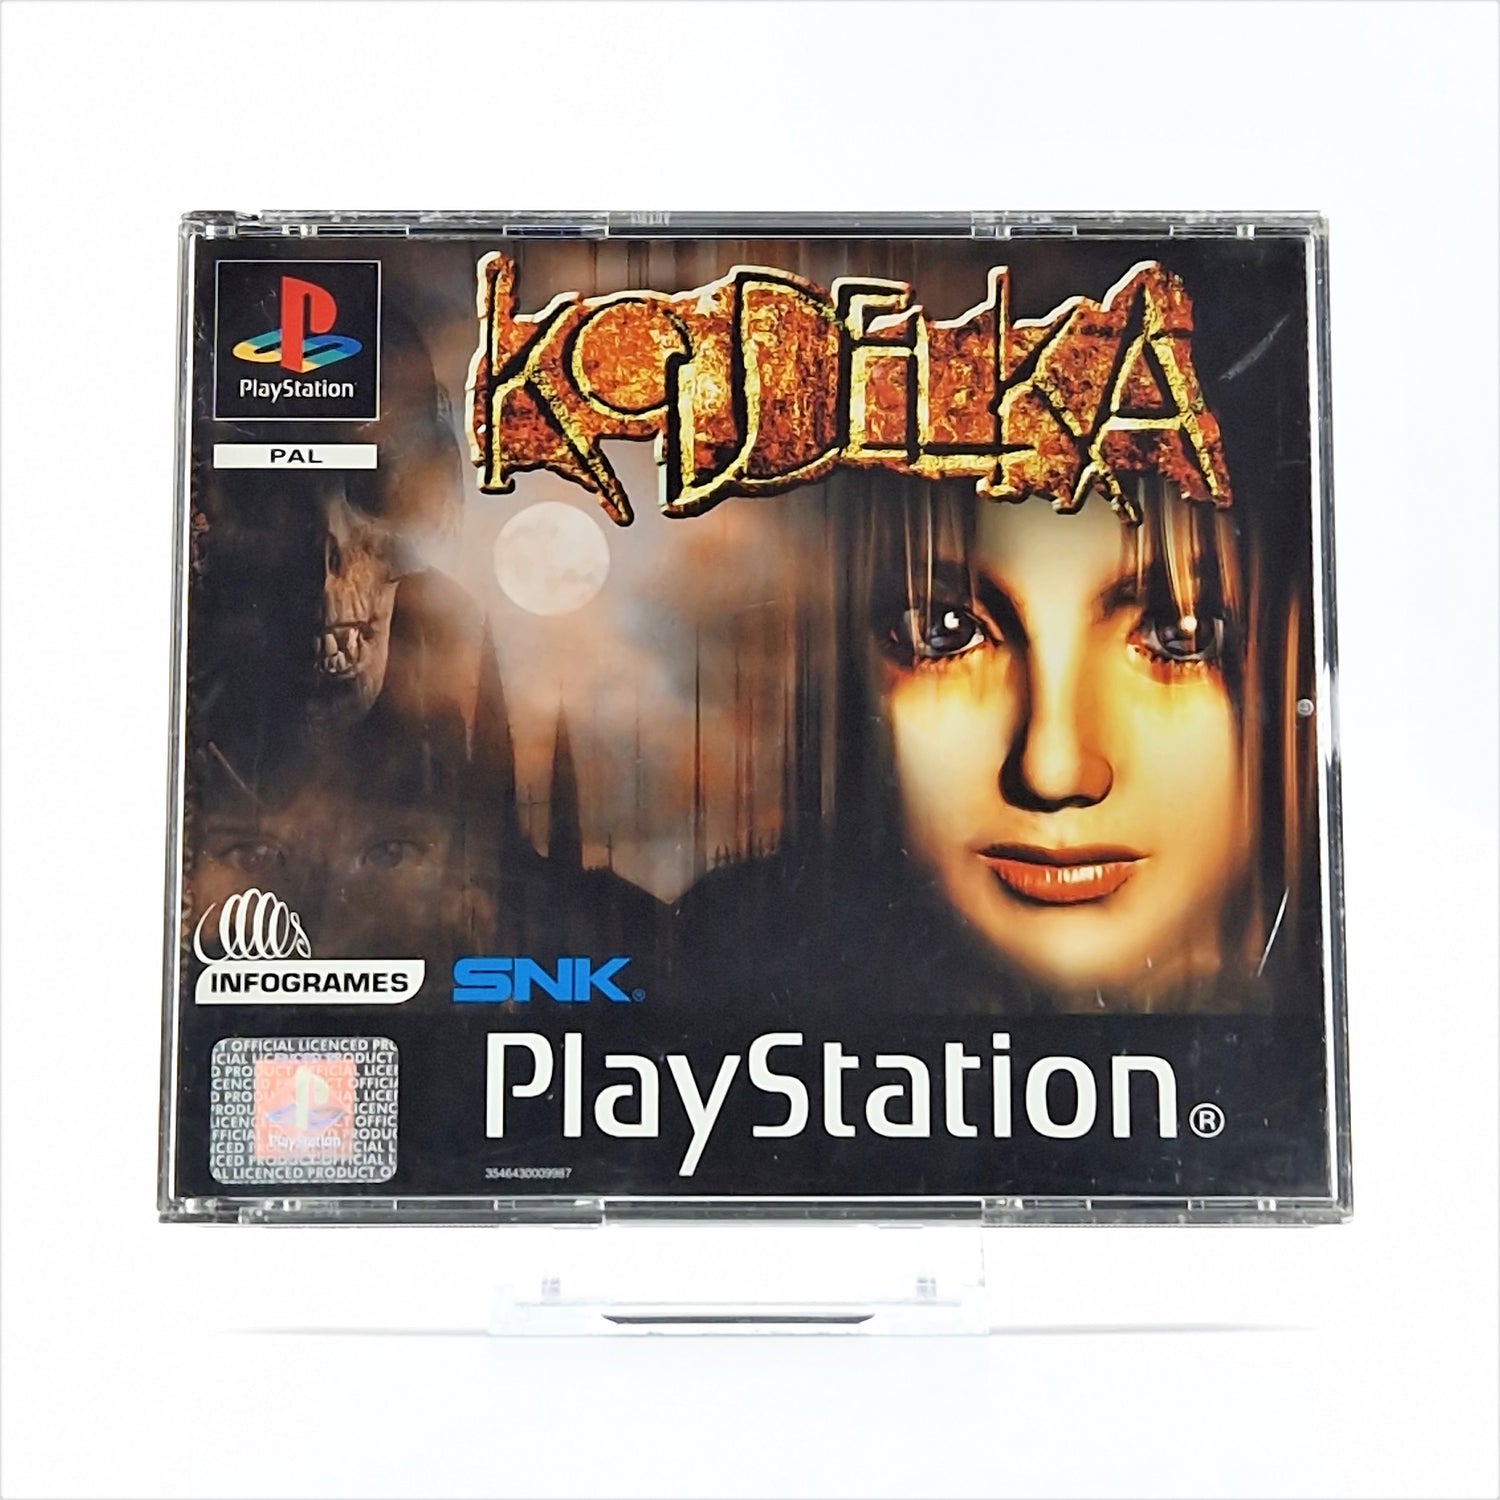 Playstation 1 Game: Koudelka - CD Instructions OVP / PS1 Psx PAL